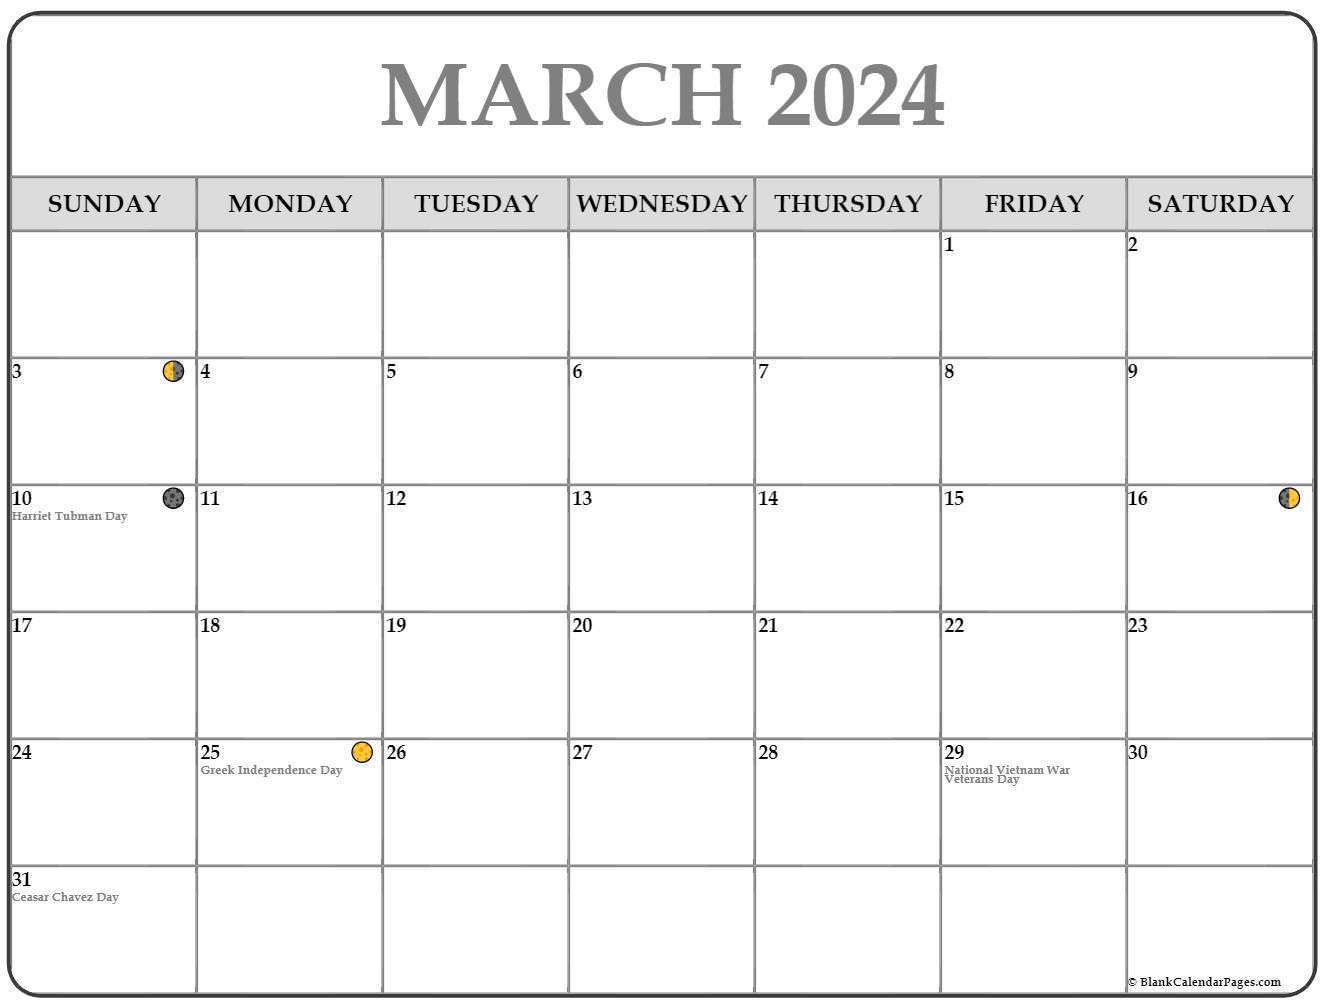 March 2020 calendar | free printable monthly calendars1767 x 1333